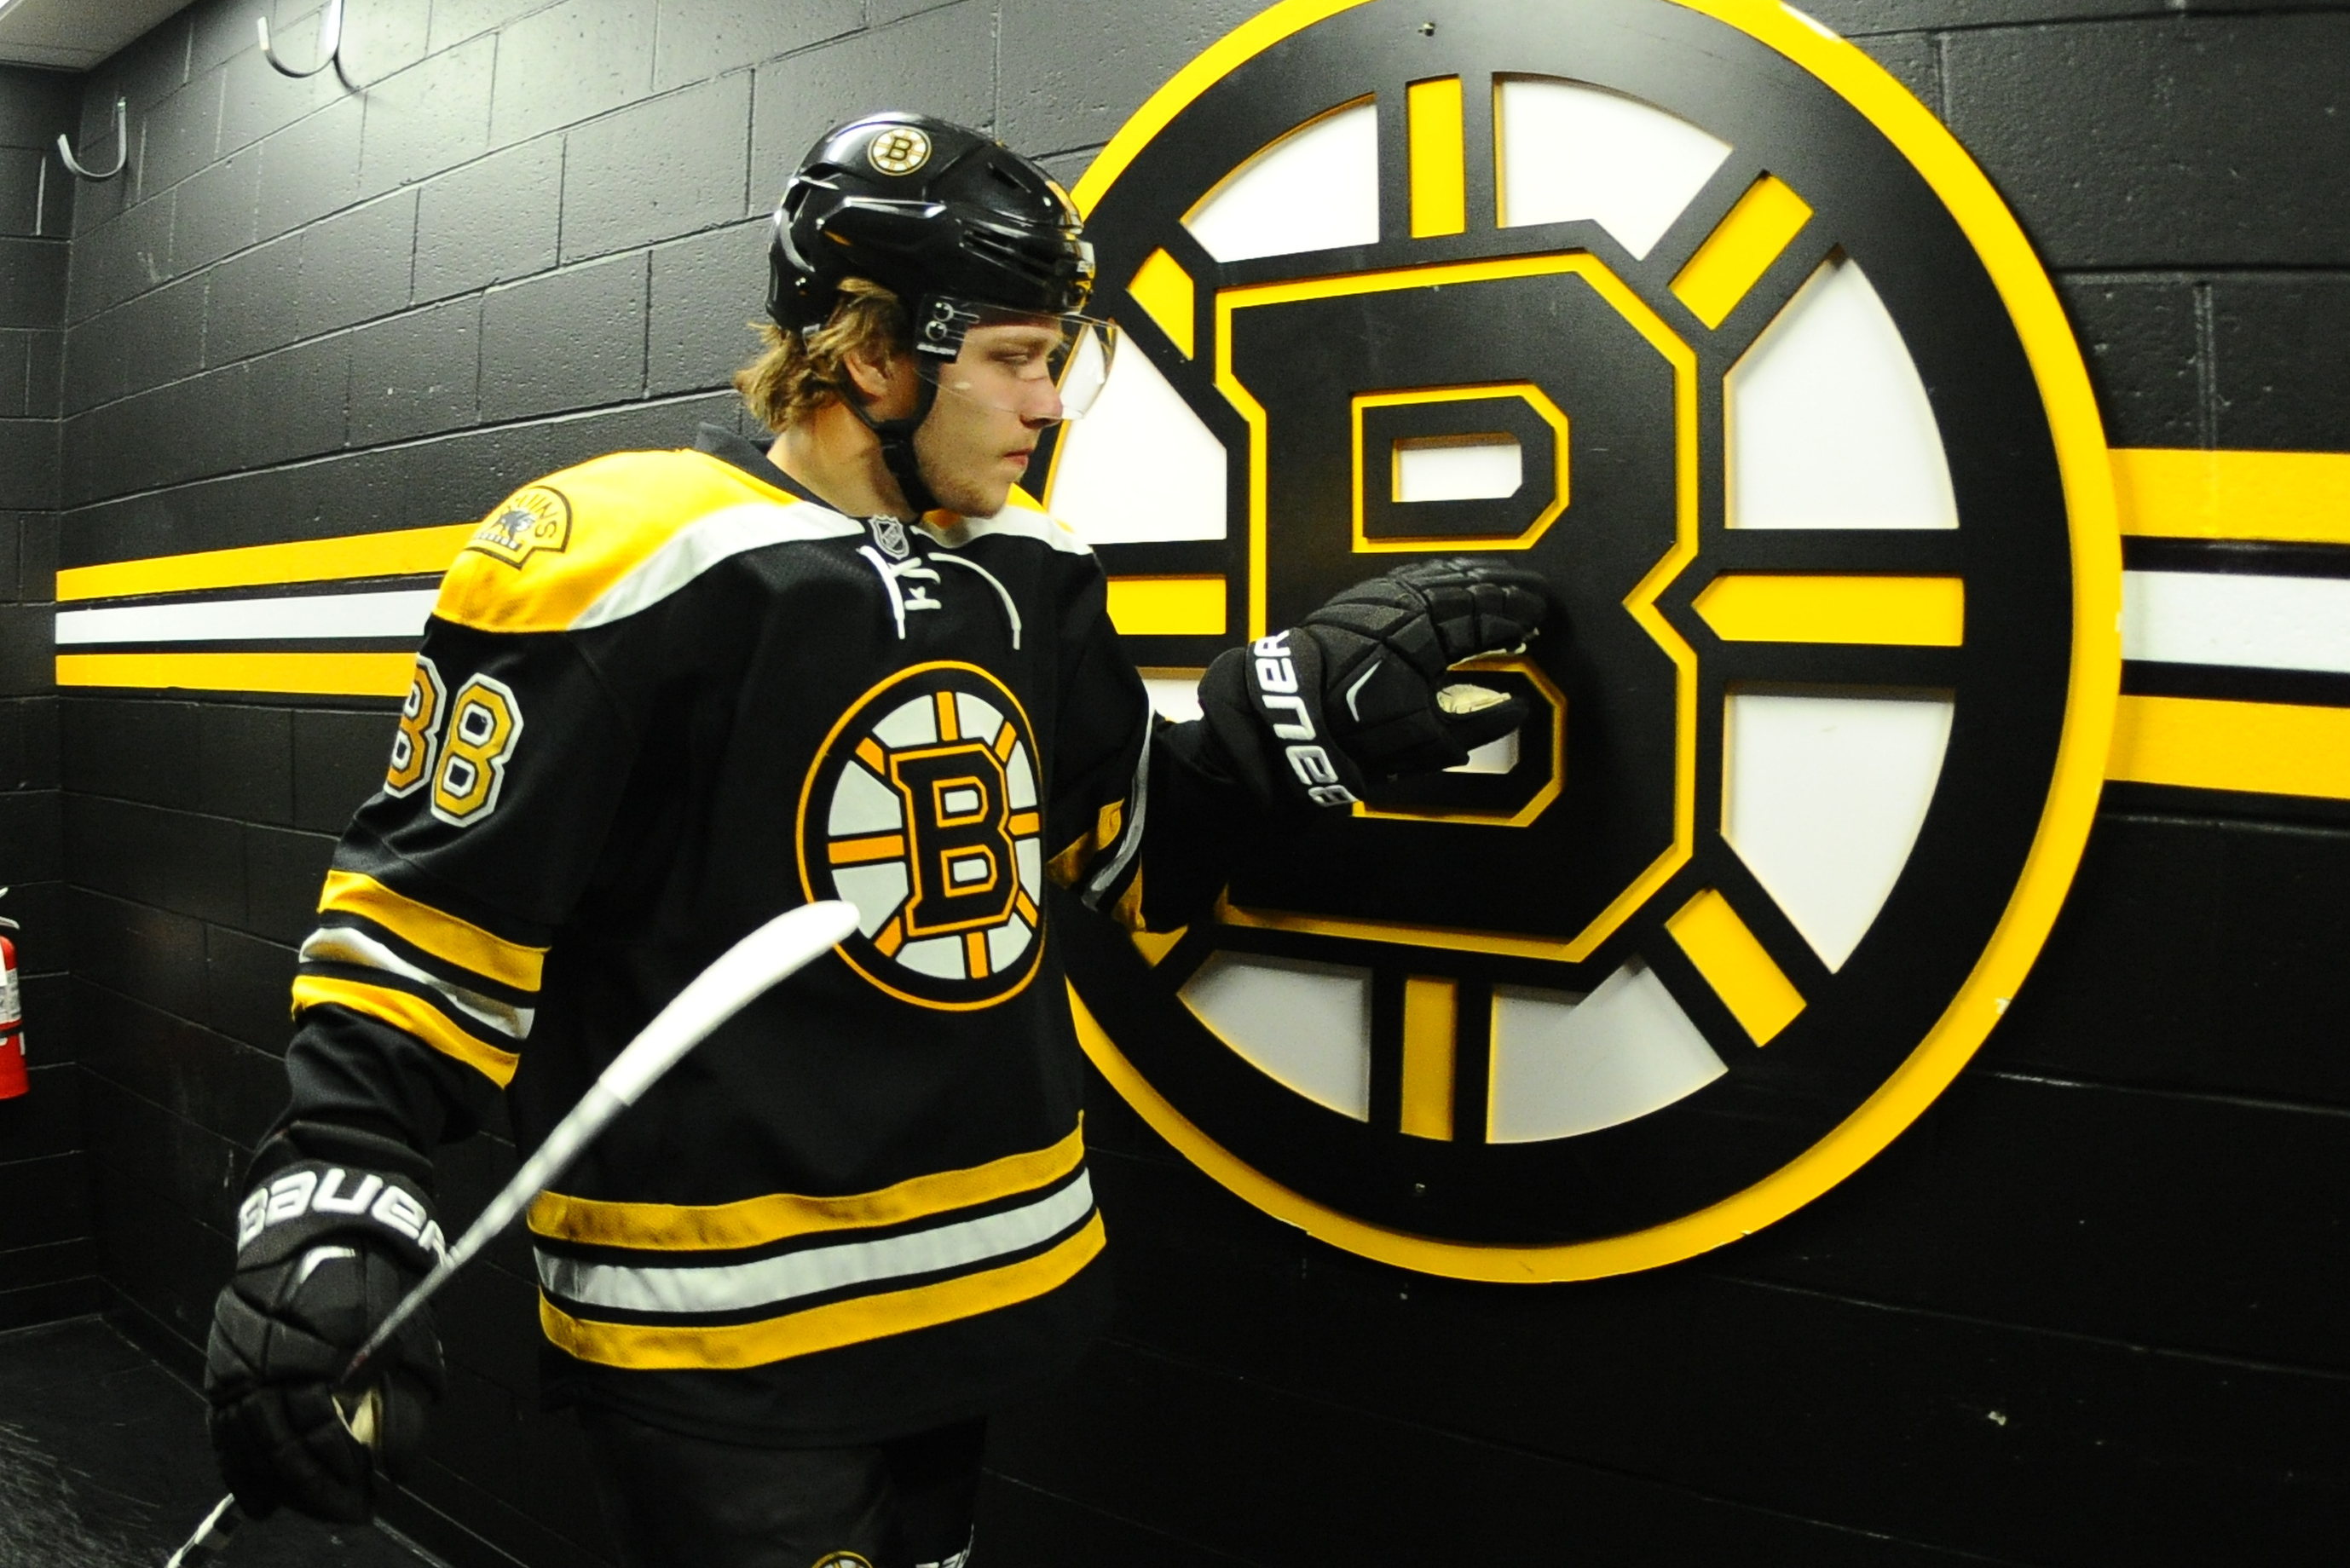 NHL SportsPicks Boston Bruins David Pastrnak 7-Inch Scale Posed